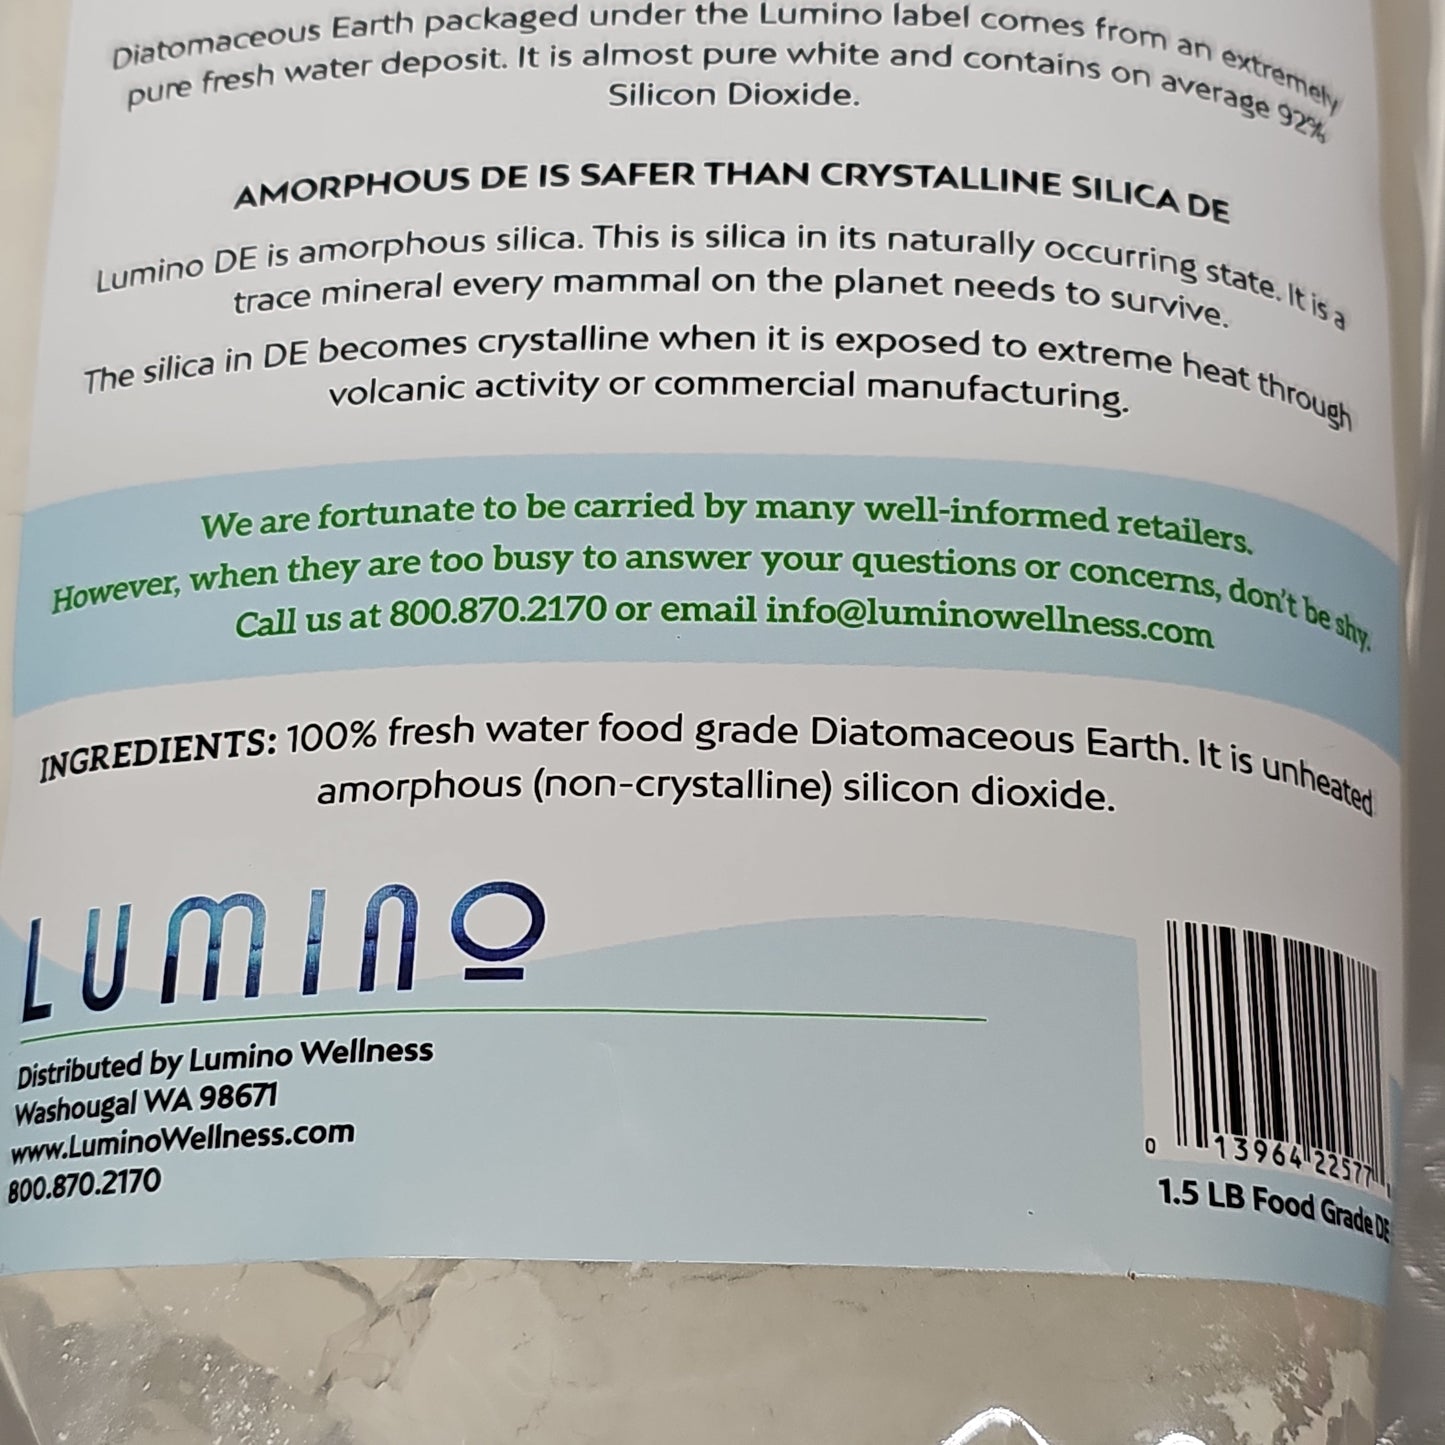 LUMINO Diatomaceous Earth Pure Food Grade 1.5 Lbs BB 01/27 MA632 (New)